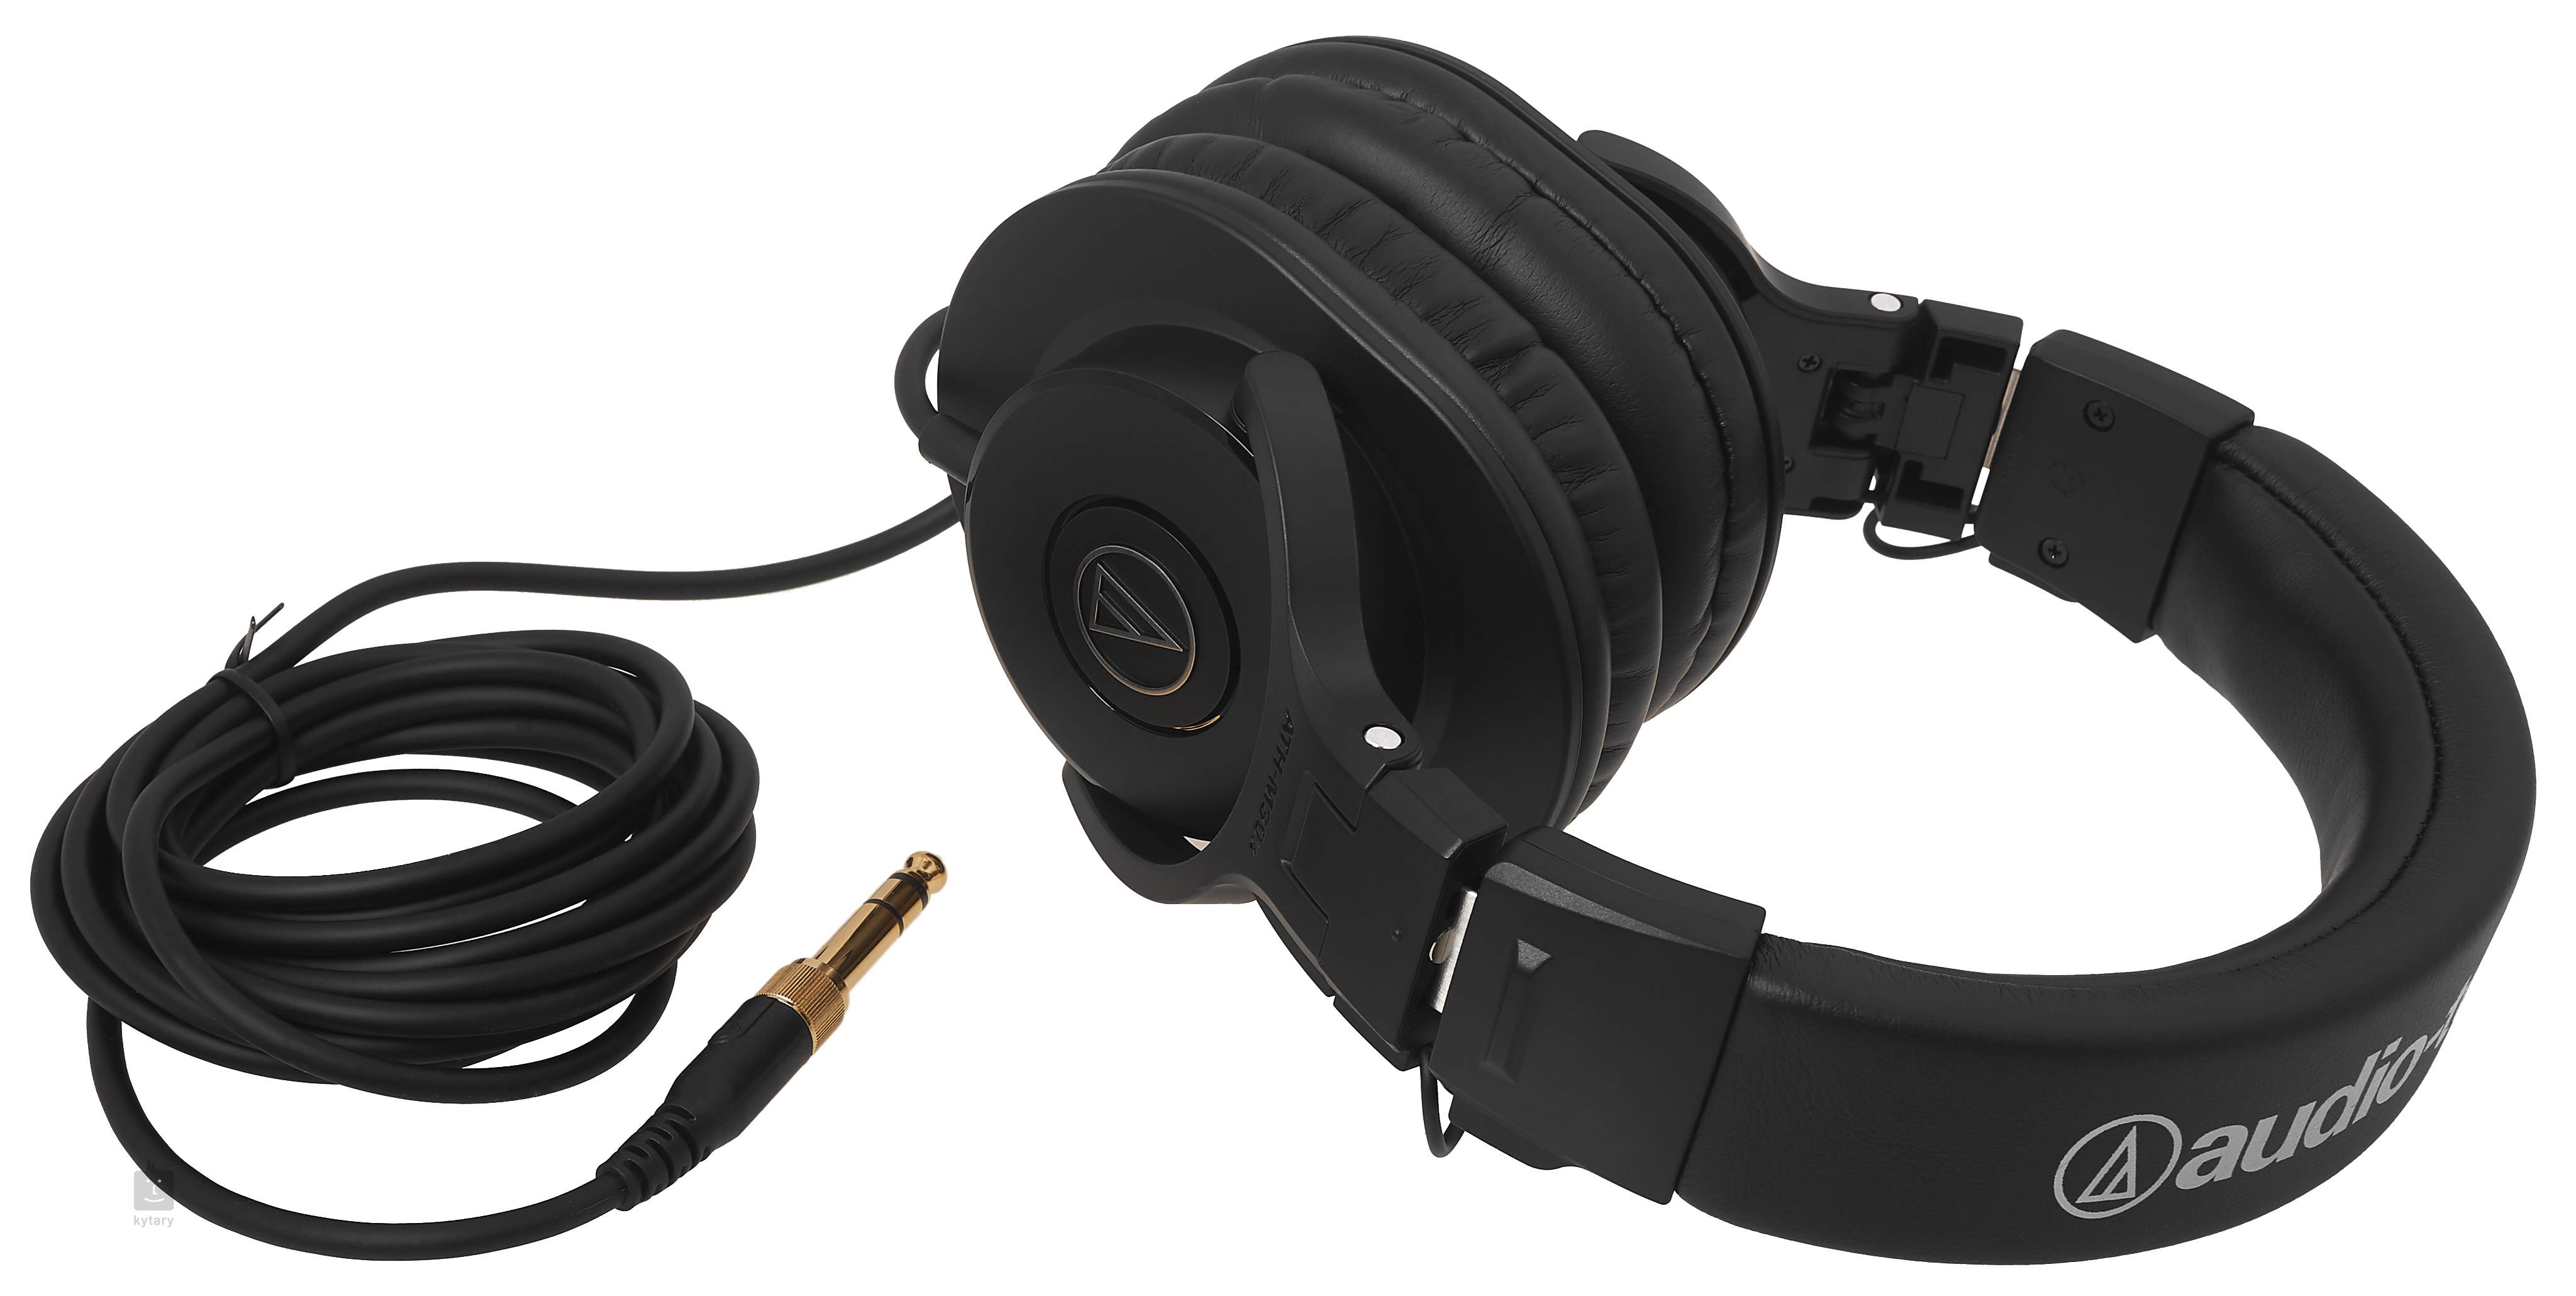 Audio-Technica M20x Auriculares Auriculares Profesionales de